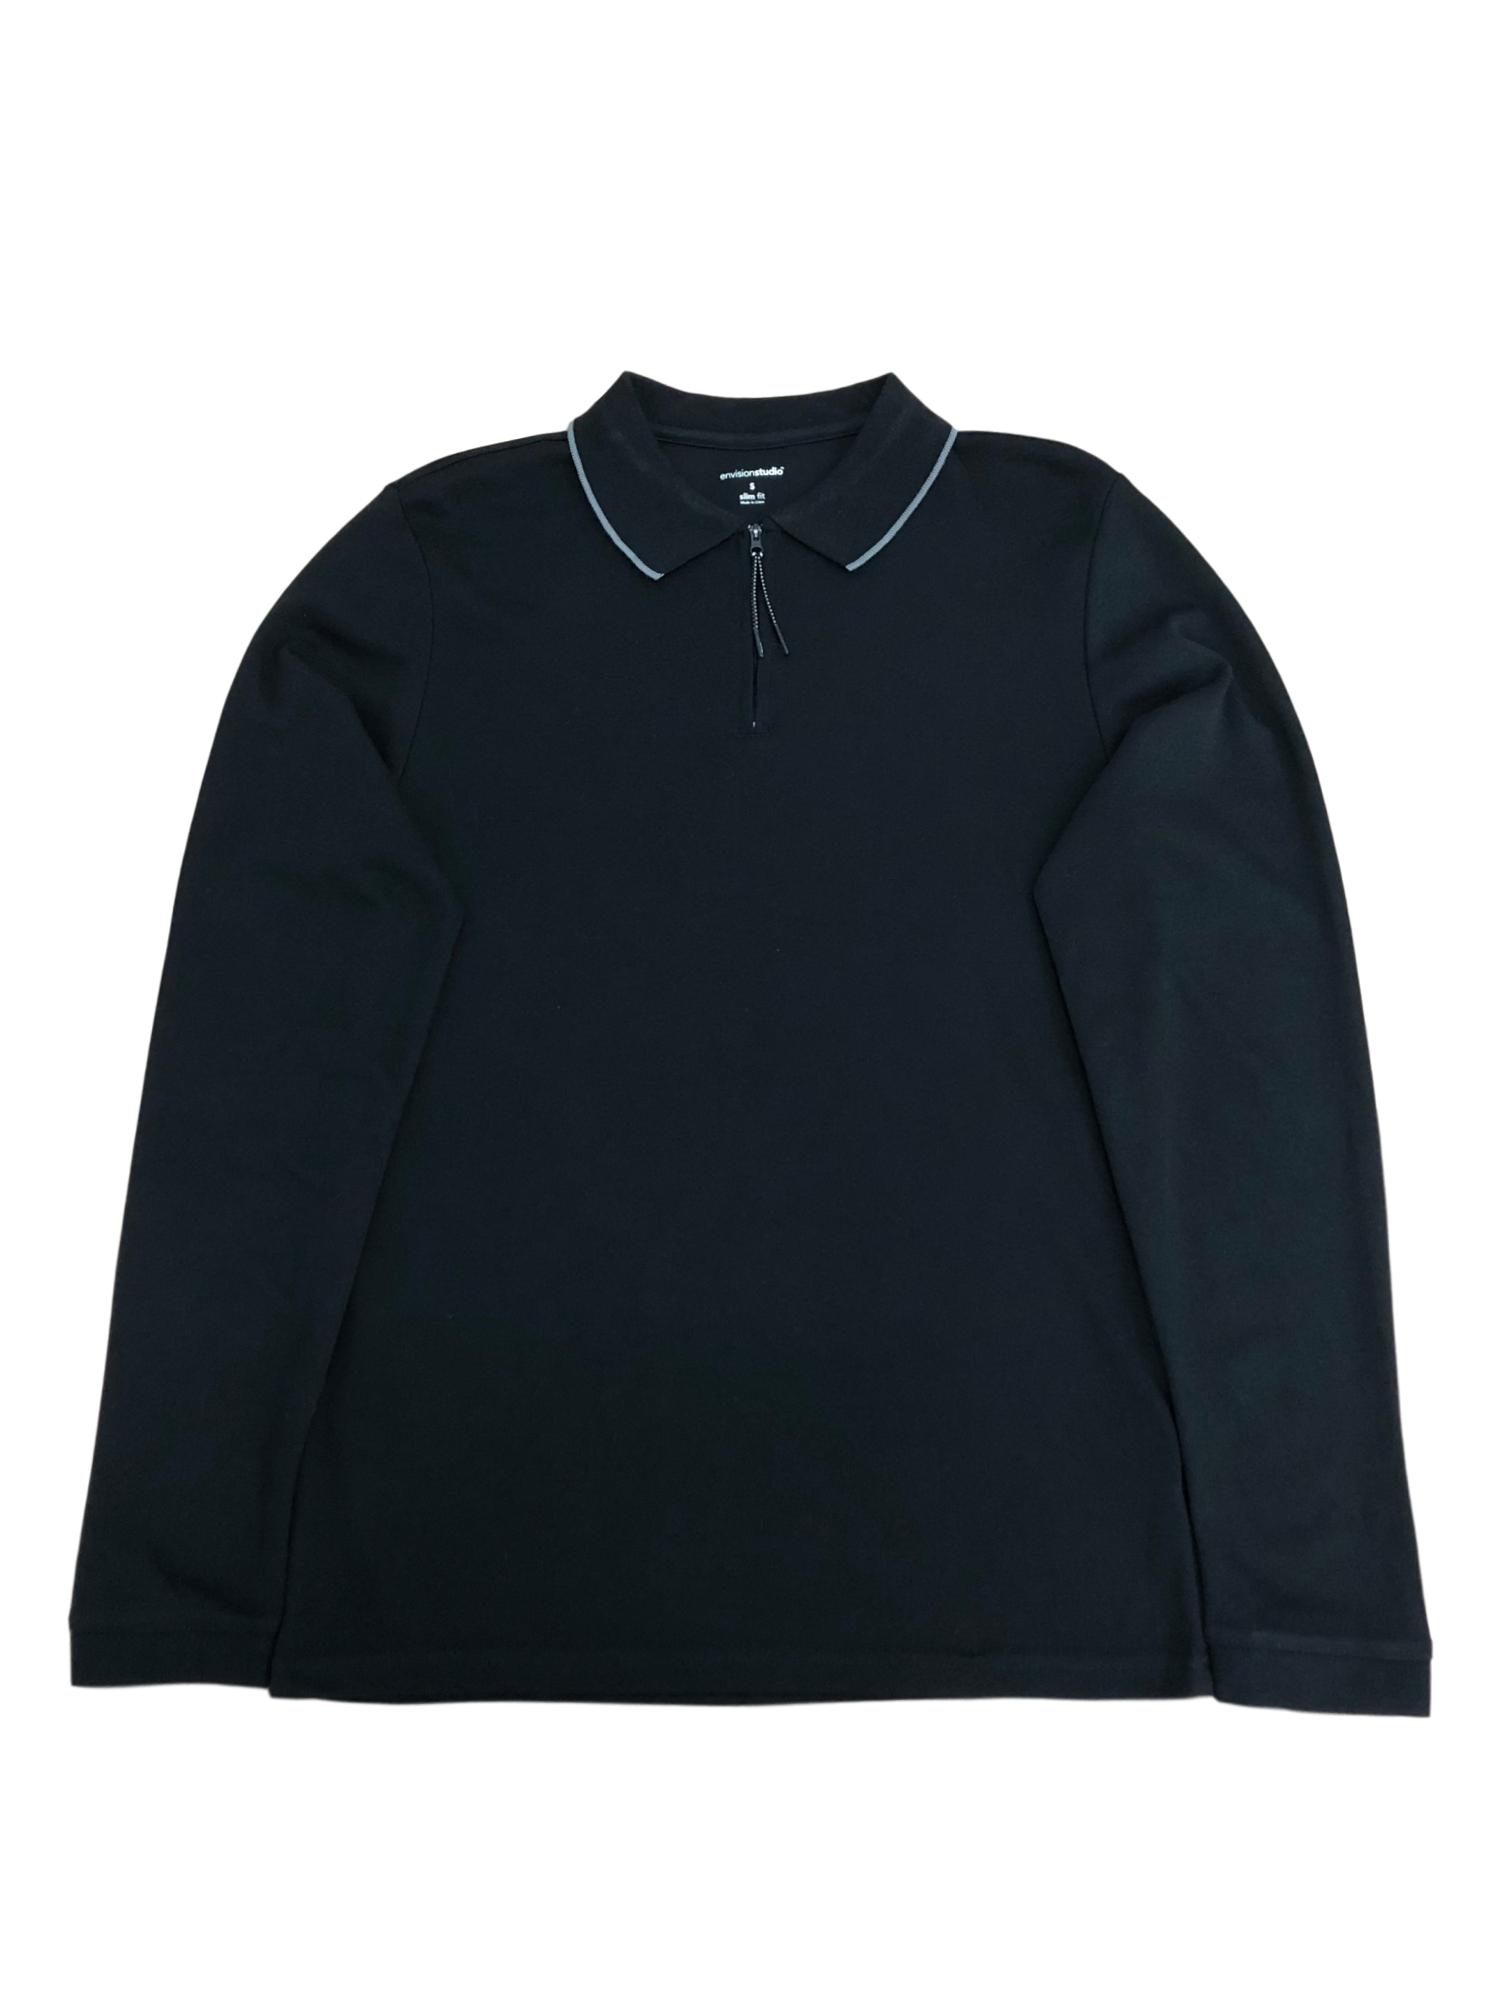 Envision Studio Mens Black Slim Fit Long Sleeve Zip Collar Polo Shirt